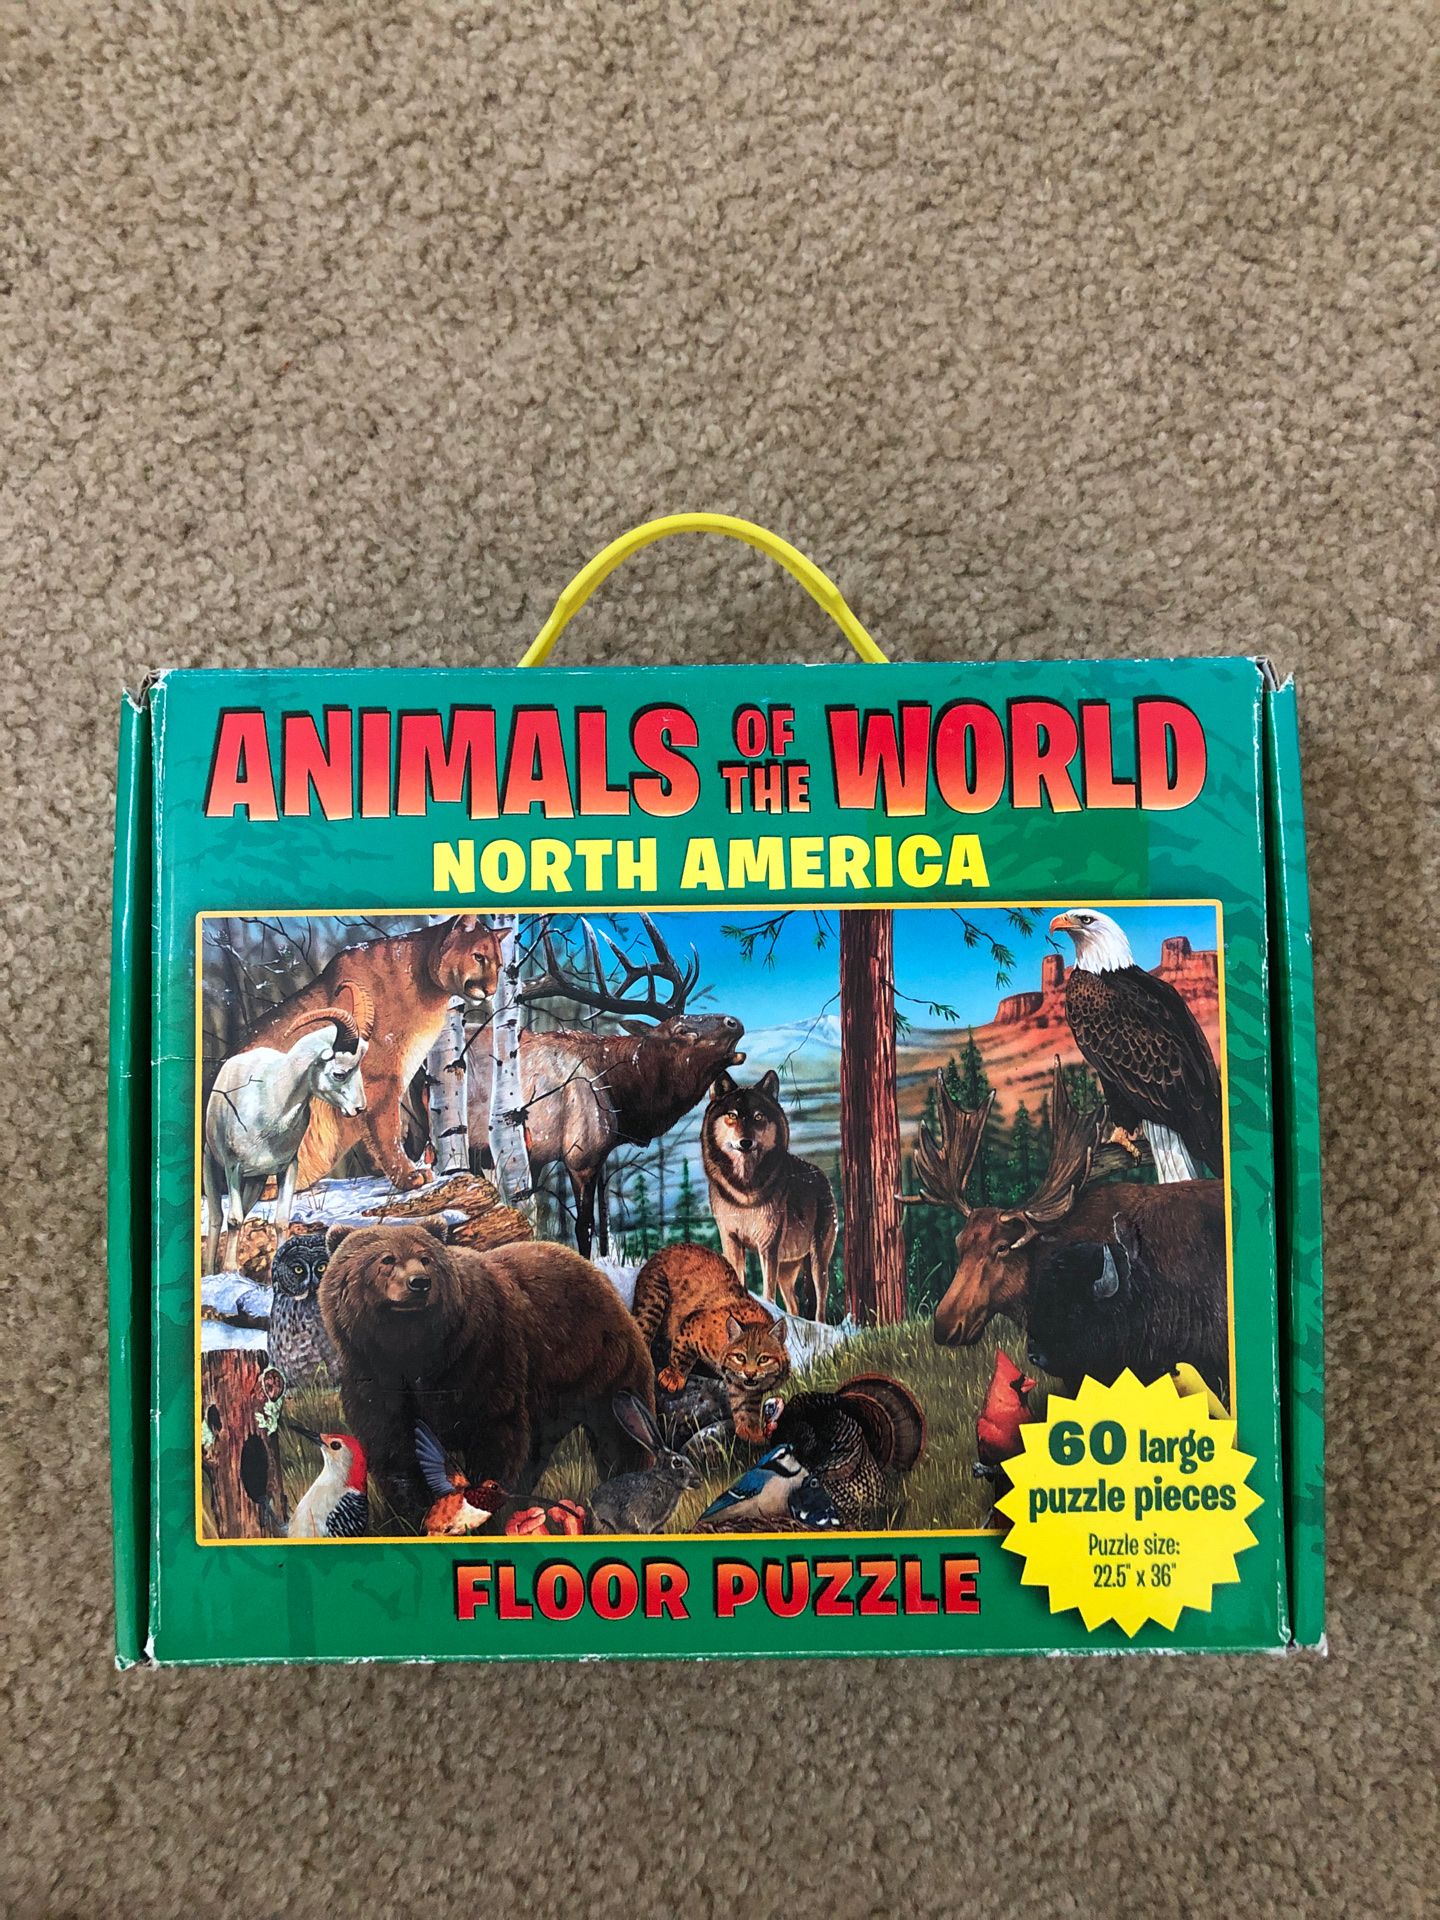 Animals of the World North America floor puzzle